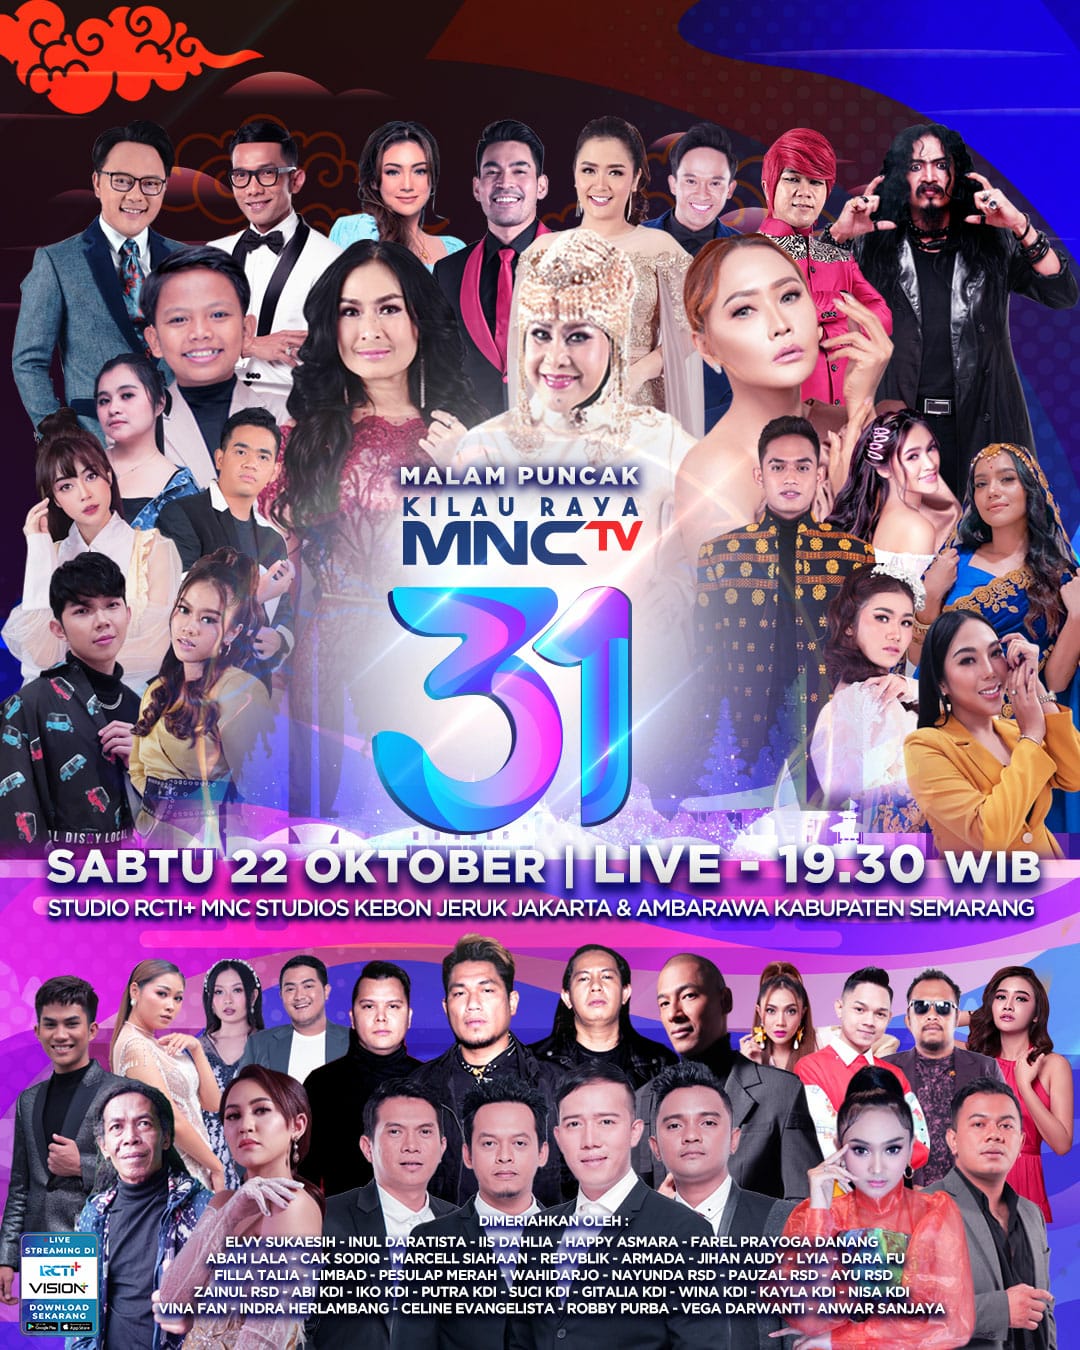 Malam Puncak Kilau Raya MNCTV 31 di Meriahkan, Farel Prayoga, Inul Daratista, Happy Asmara dan Armada